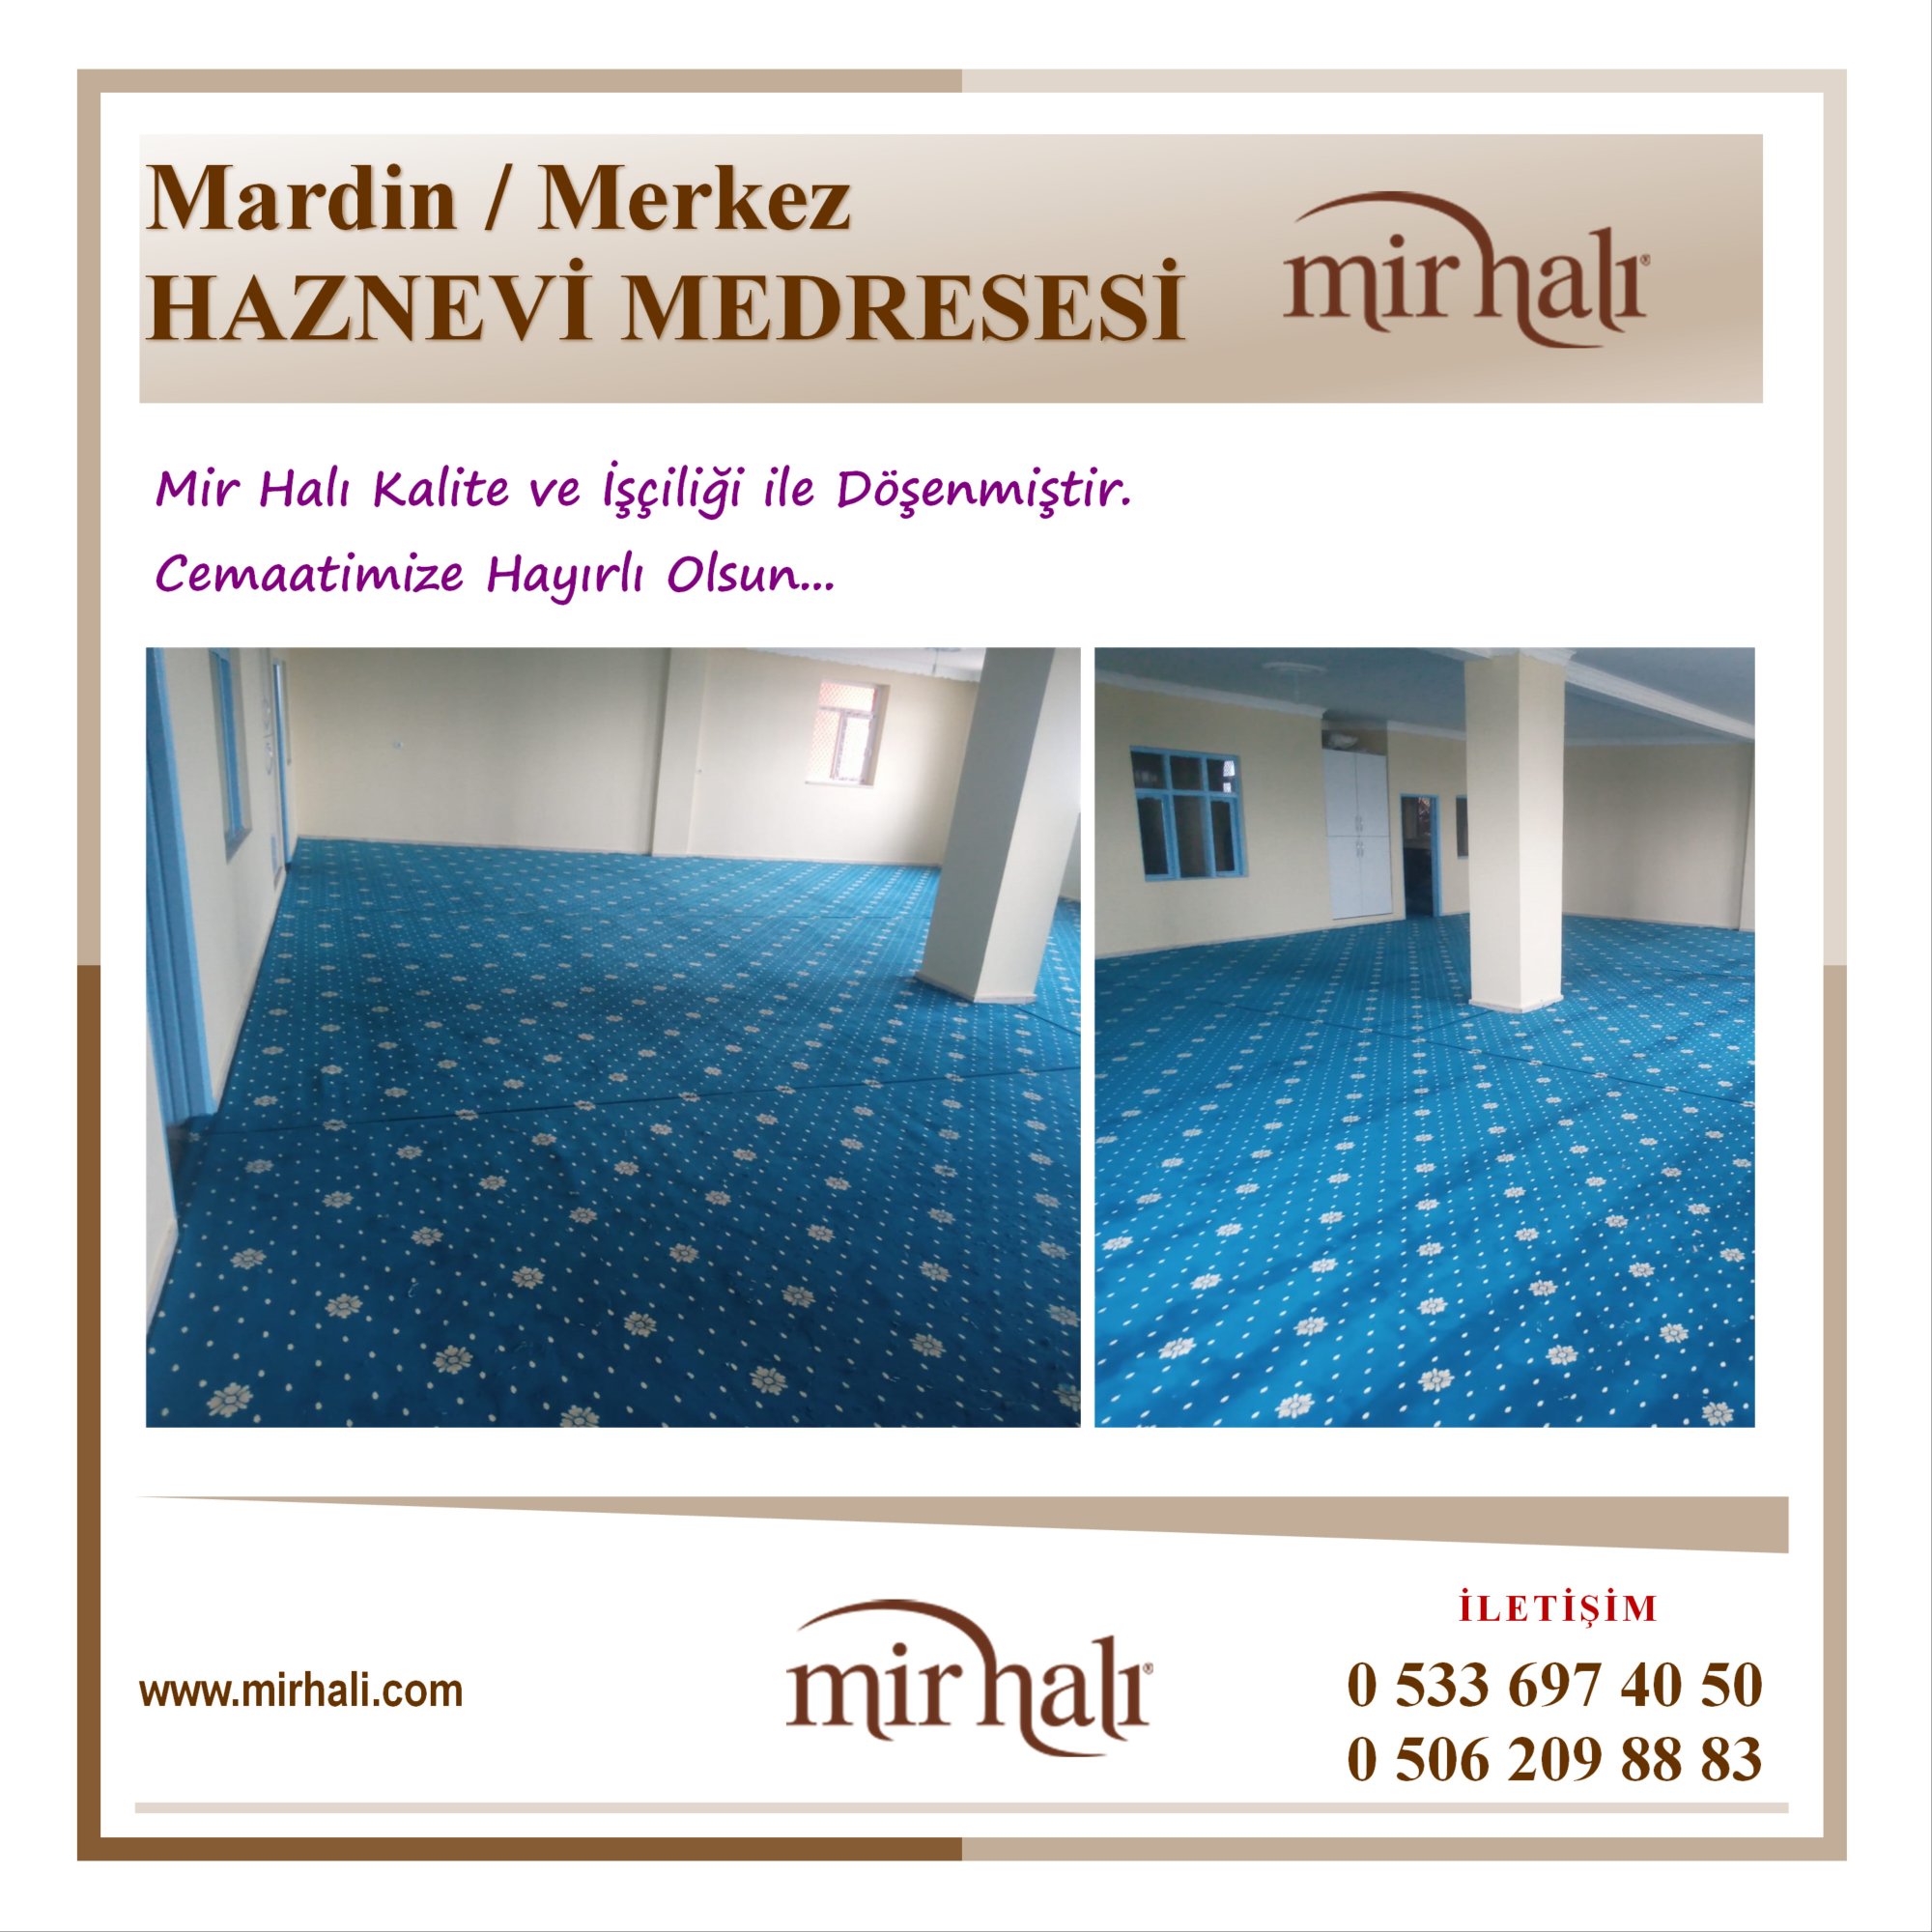 Mardin / Haznevi Medreesi